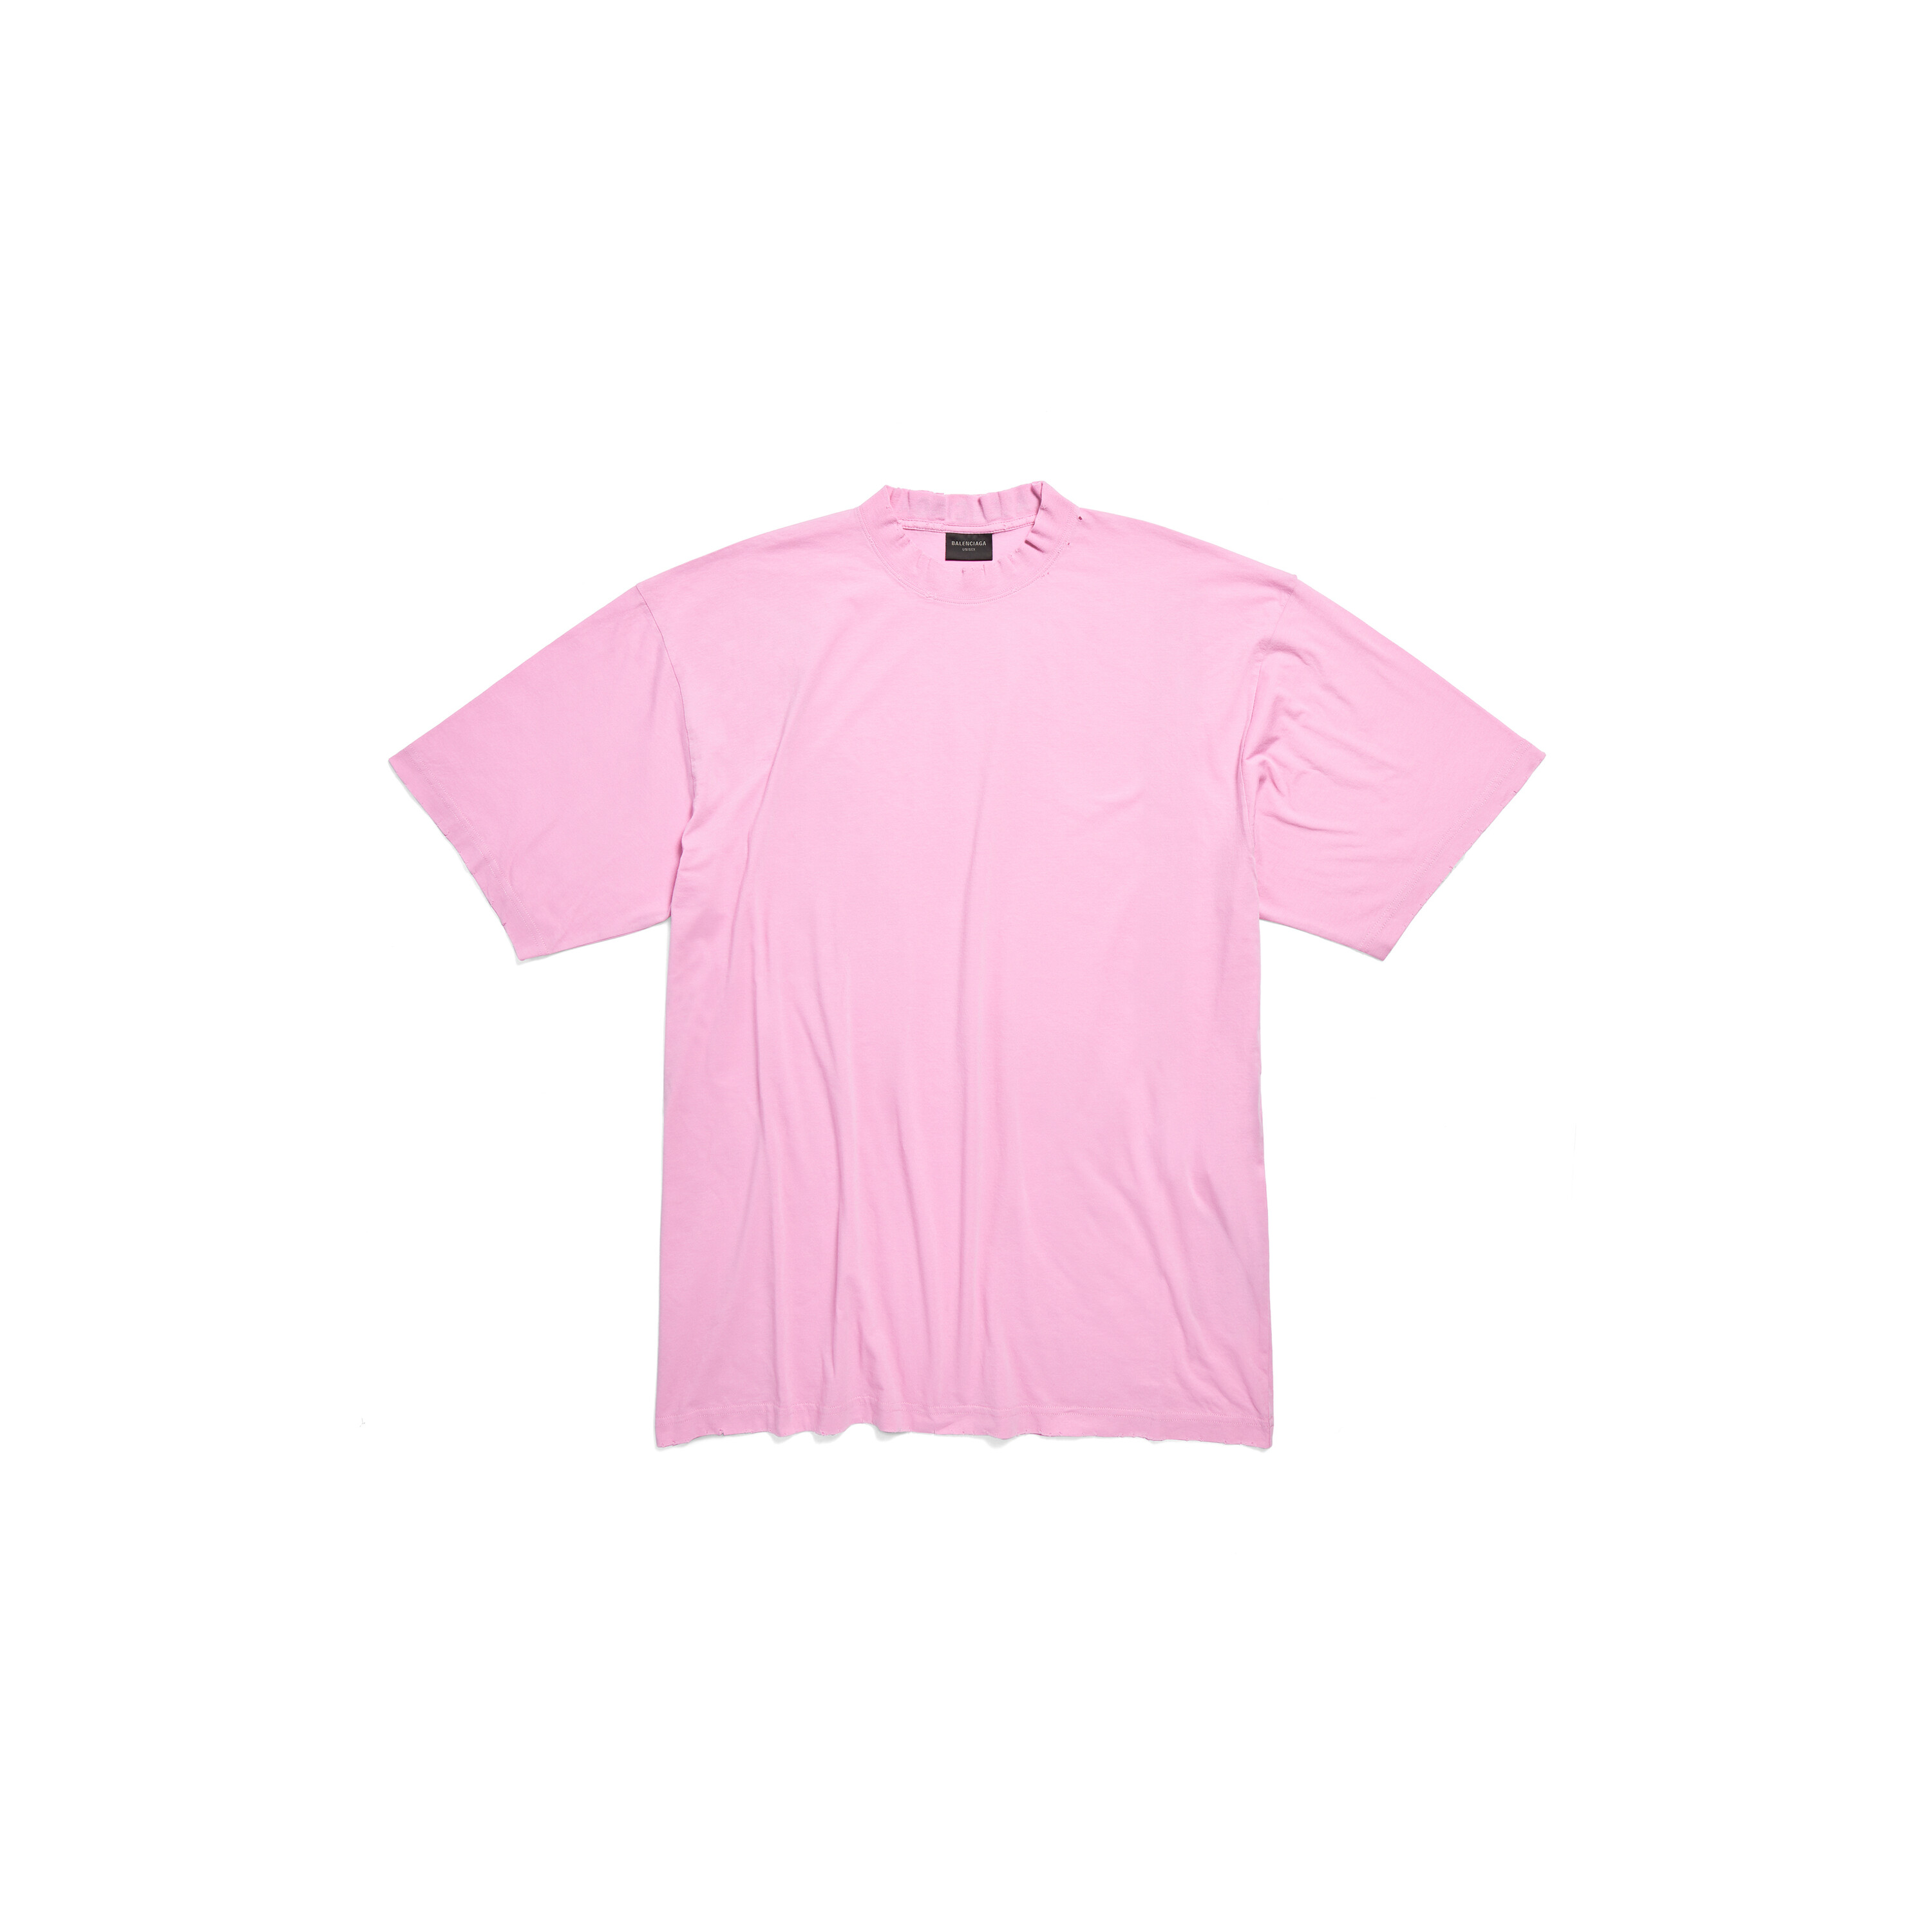 Balenciaga Tshirt Medium Fit in Pink  Balenciaga NL